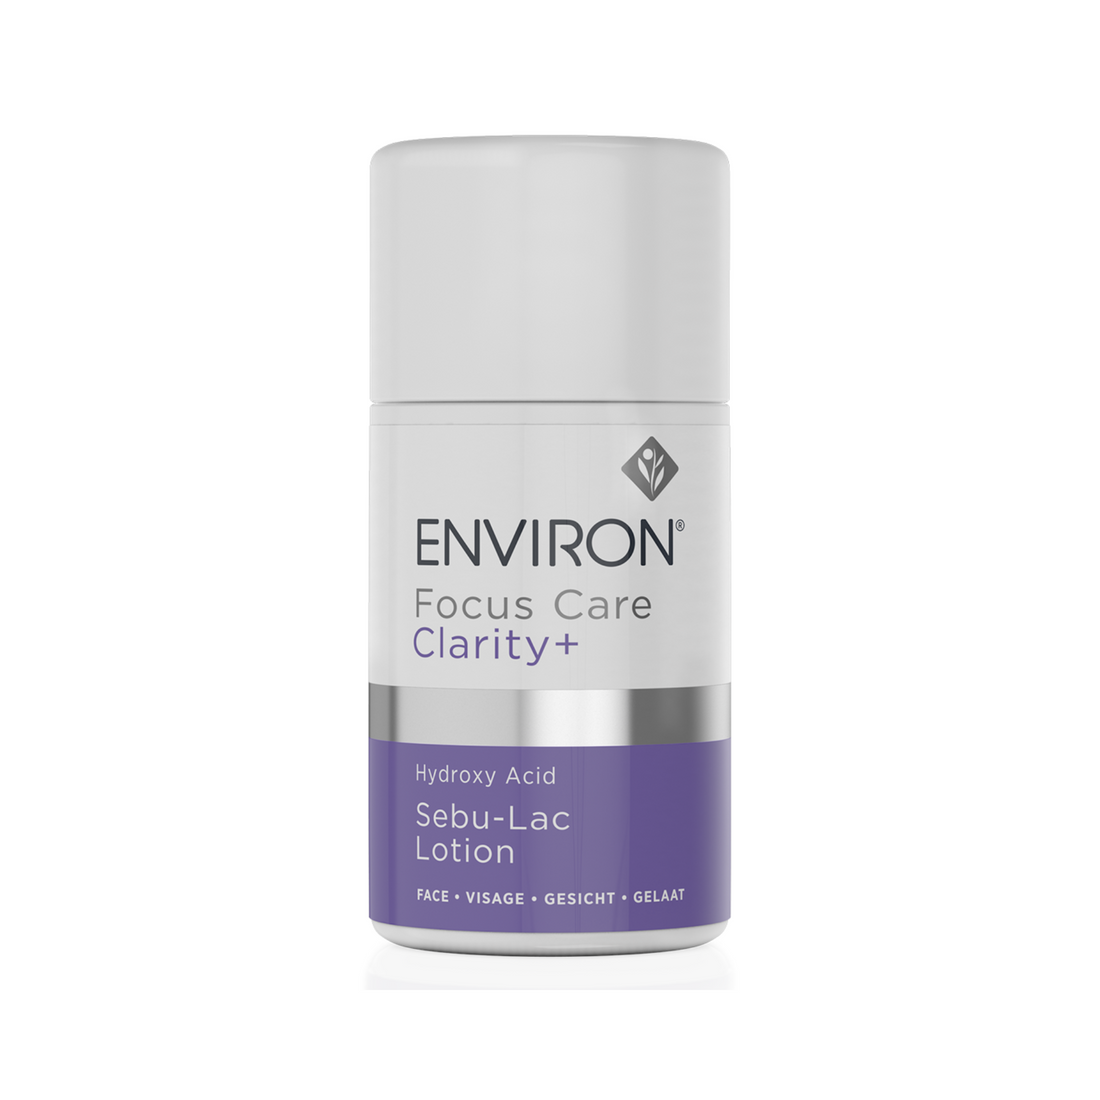 Environ Focus Care Clarity+ Hydroxy Acid Sebu - Lac Lotion